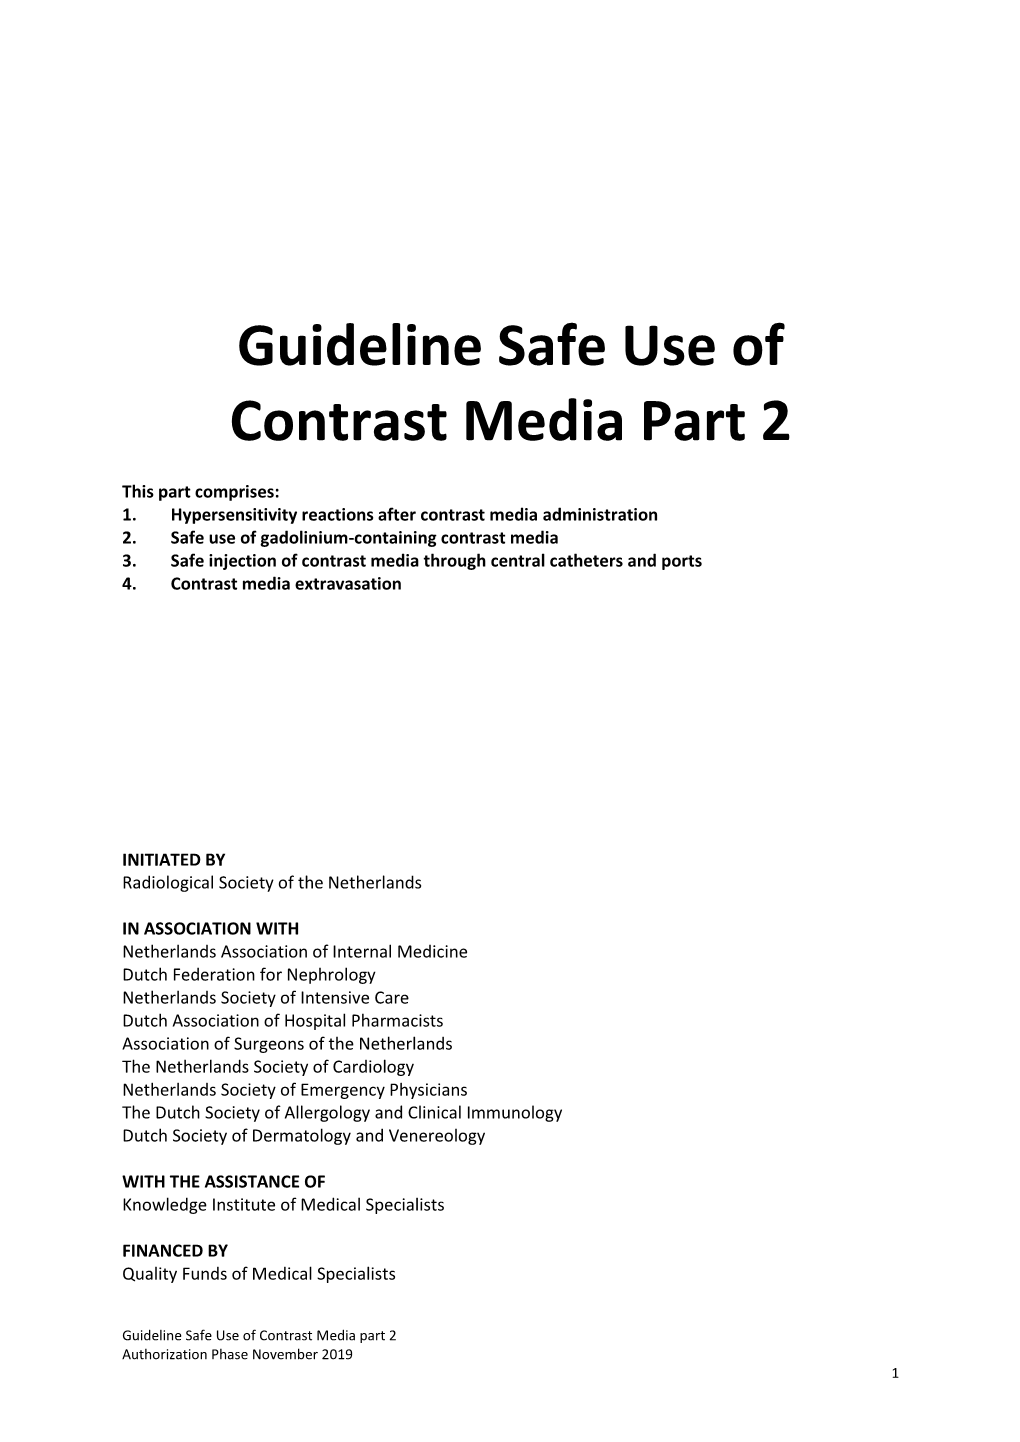 Guideline Safe Use of Contrast Media Part 2